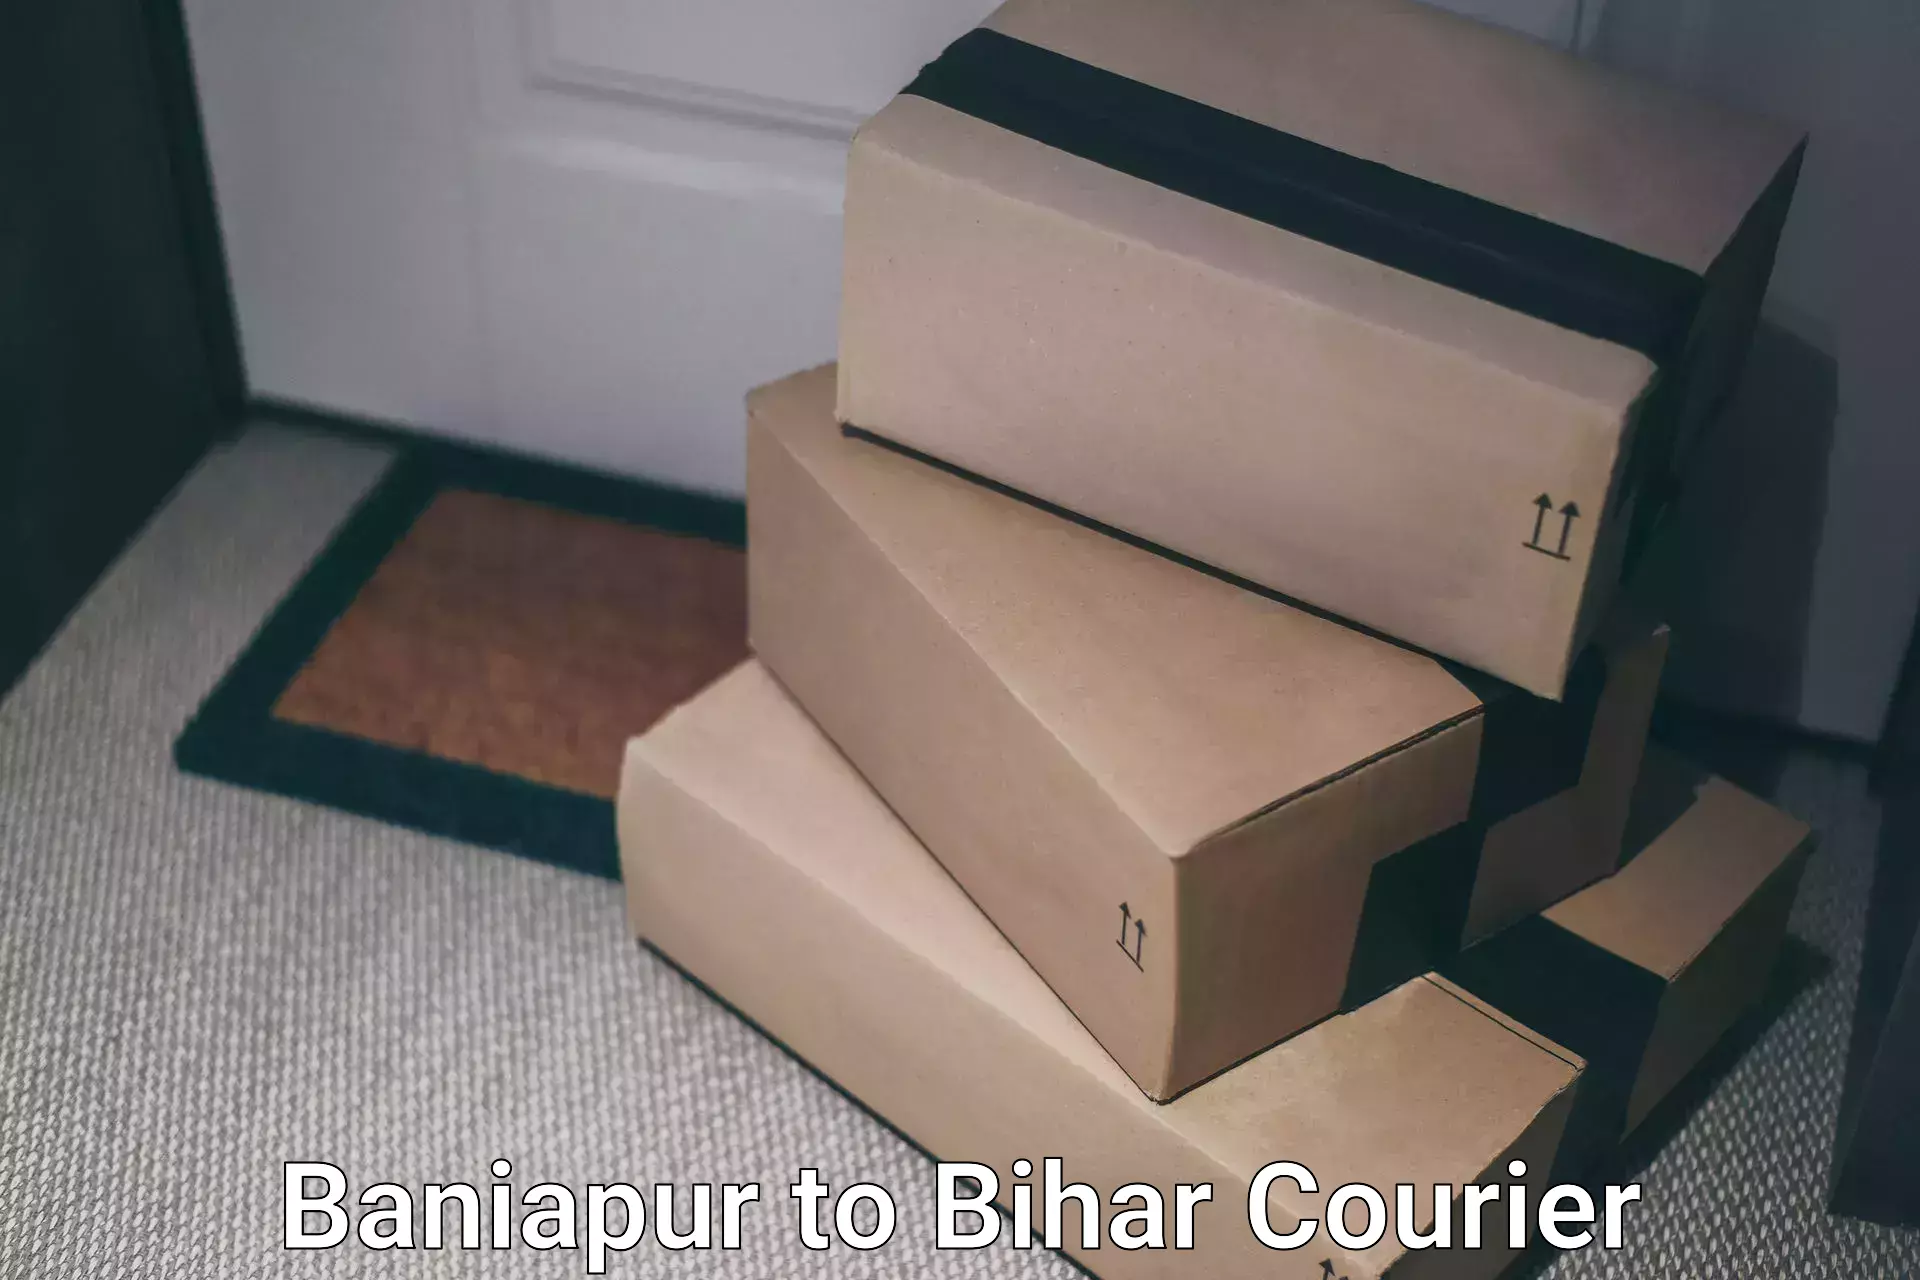 Package delivery network Baniapur to Malmaliya